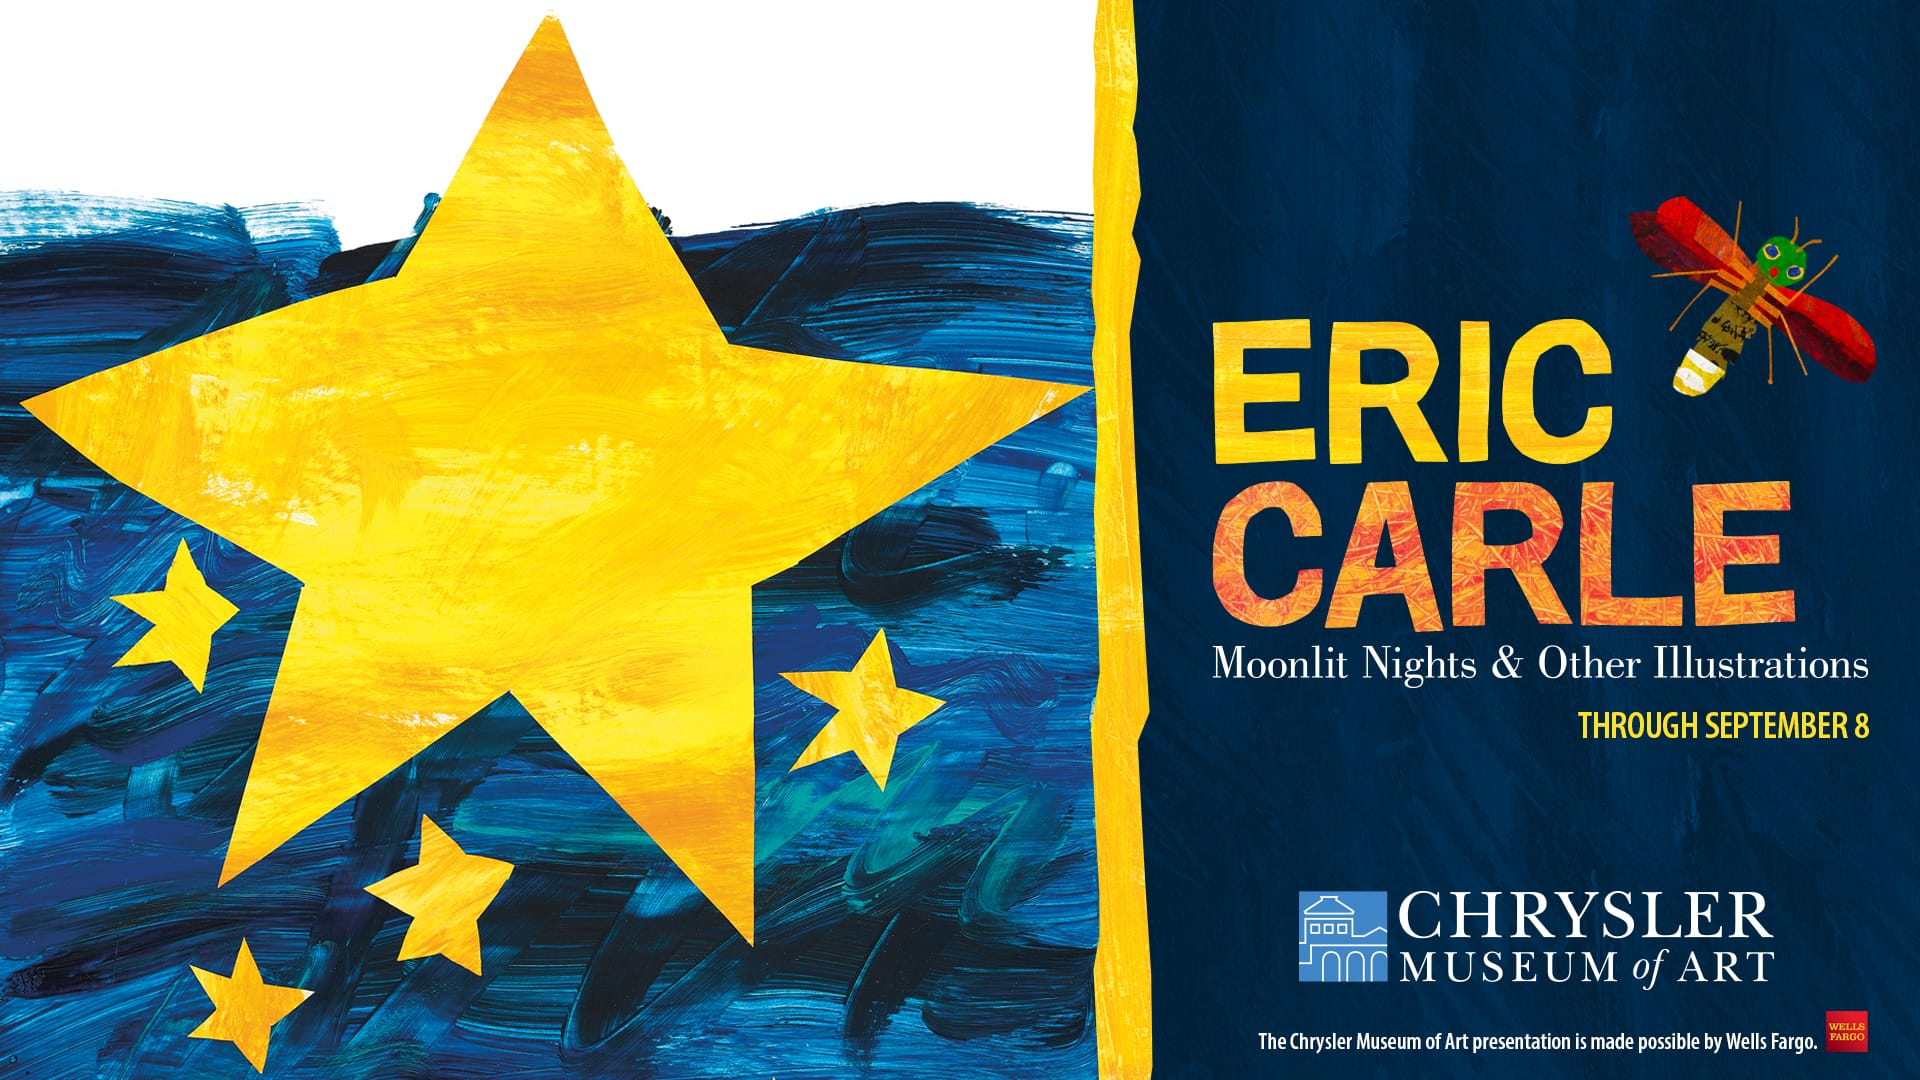 Chrysler Exhibit - Eric Carle: Moonlit Nights & Other Illustrations